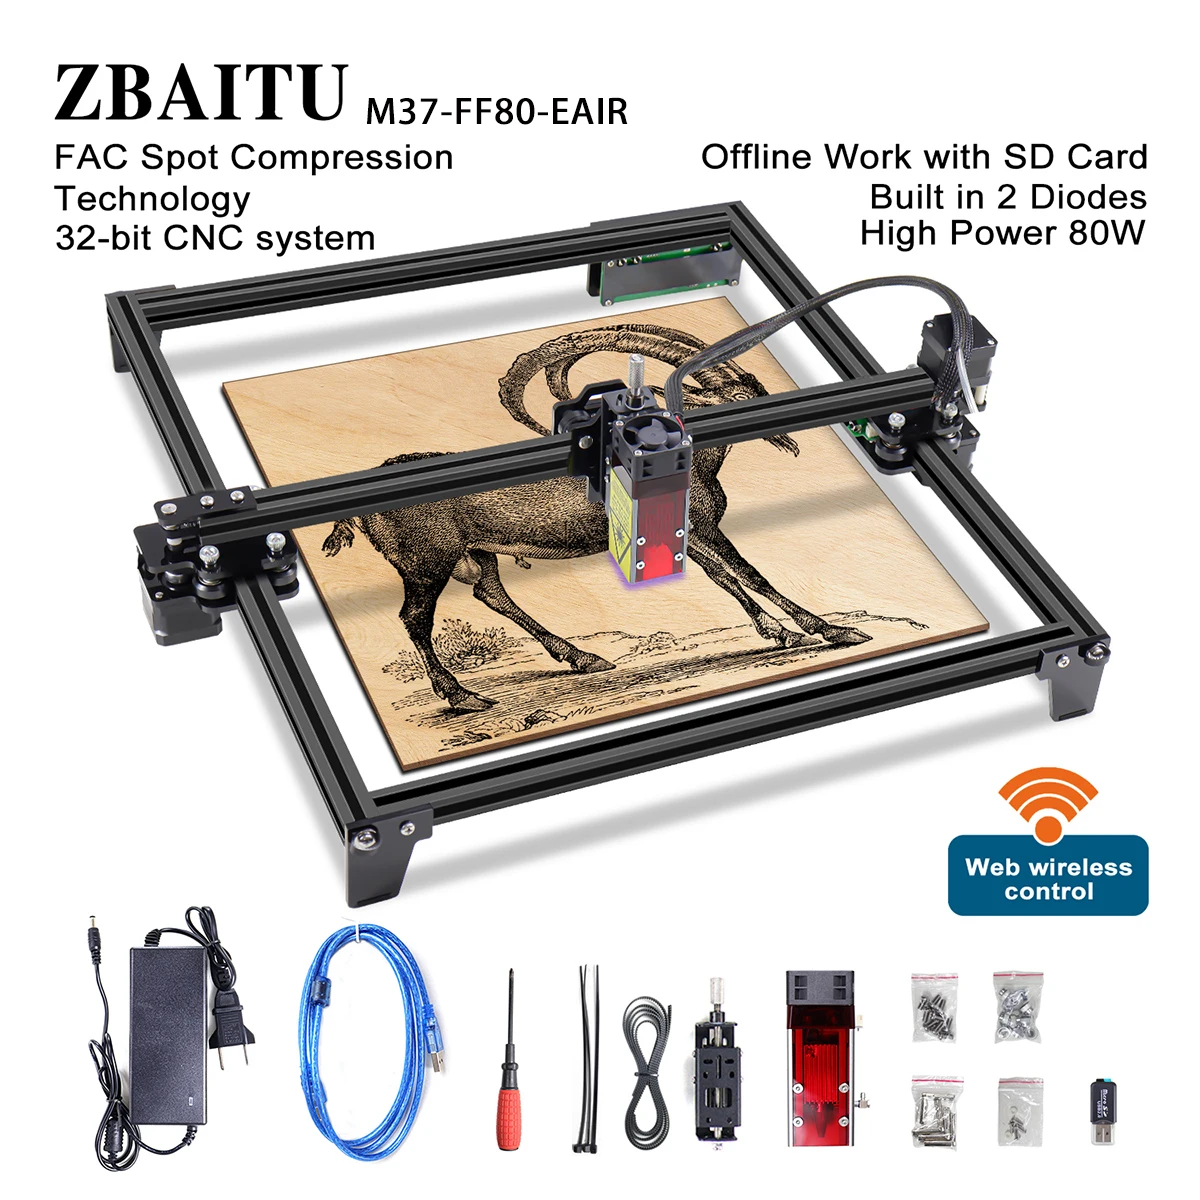 ZBAITU FF80 Upgrade 80W-EAIR Cutter Remaker ,With Air Assisted,Offline Work/FAC,Laser Engraving Machine Cut 0.05 MM Steel, Wood enlarge